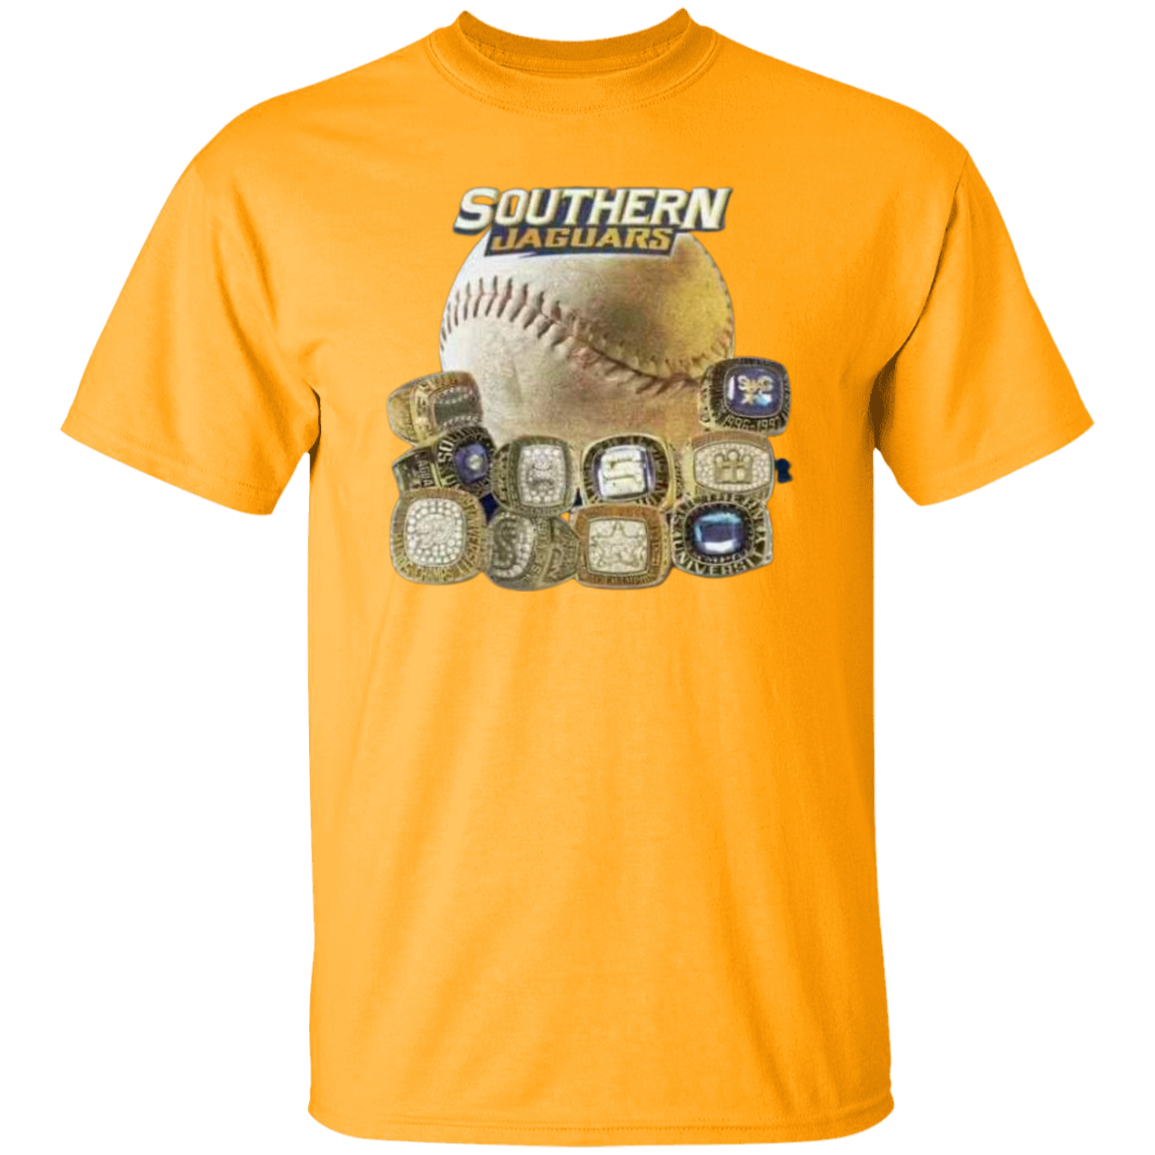 SU Baseball SWAC (Southern Wins Another Championship) Rings G500 5.3 oz. T-Shirt